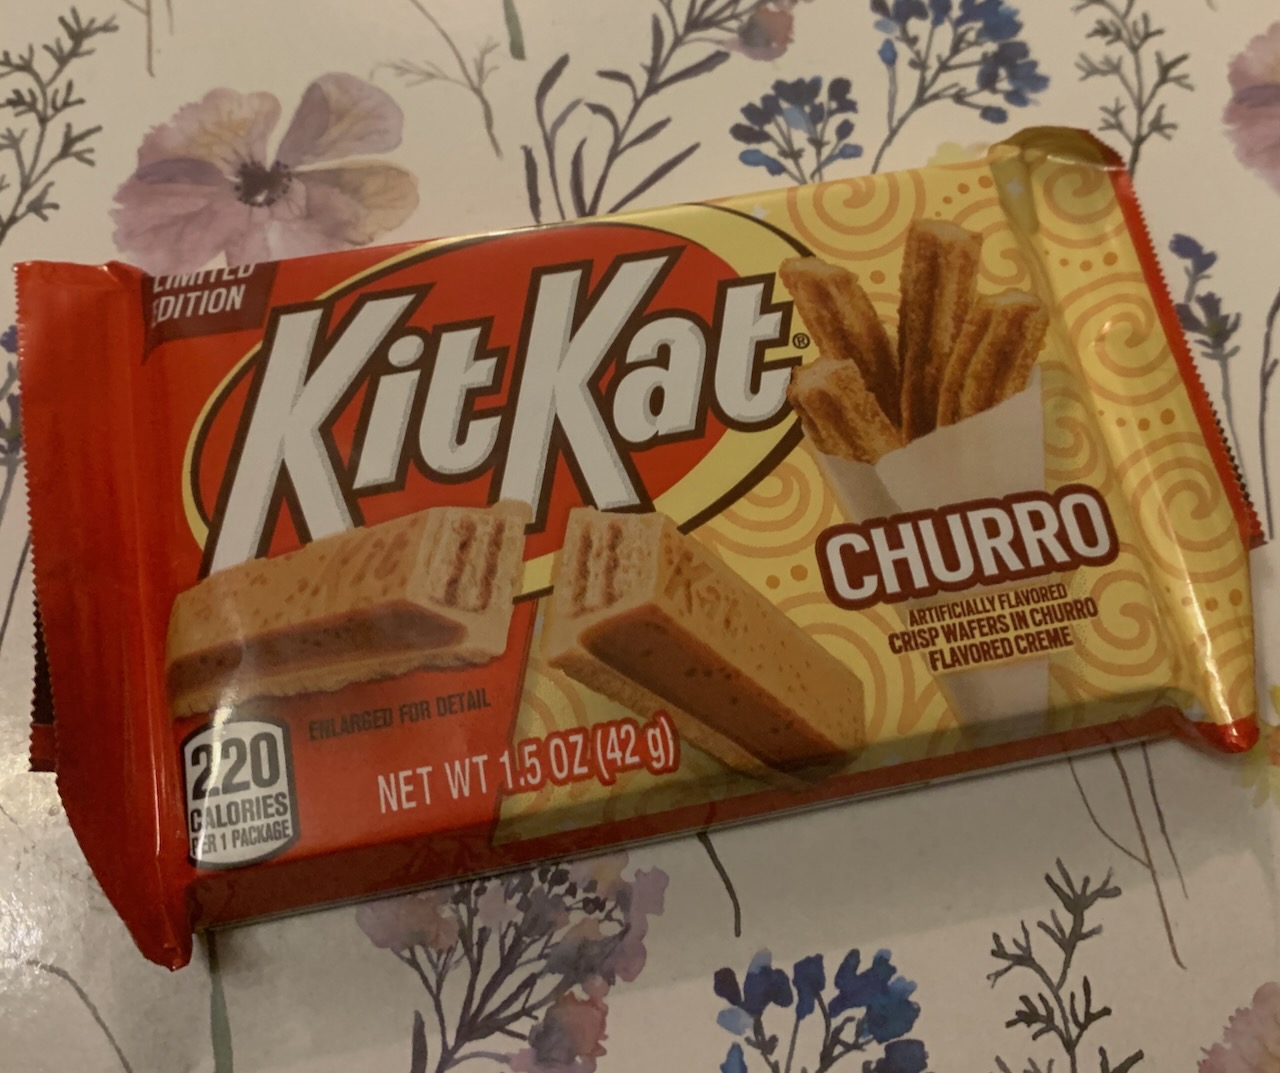 Tasting limited edition churro Kit Kats